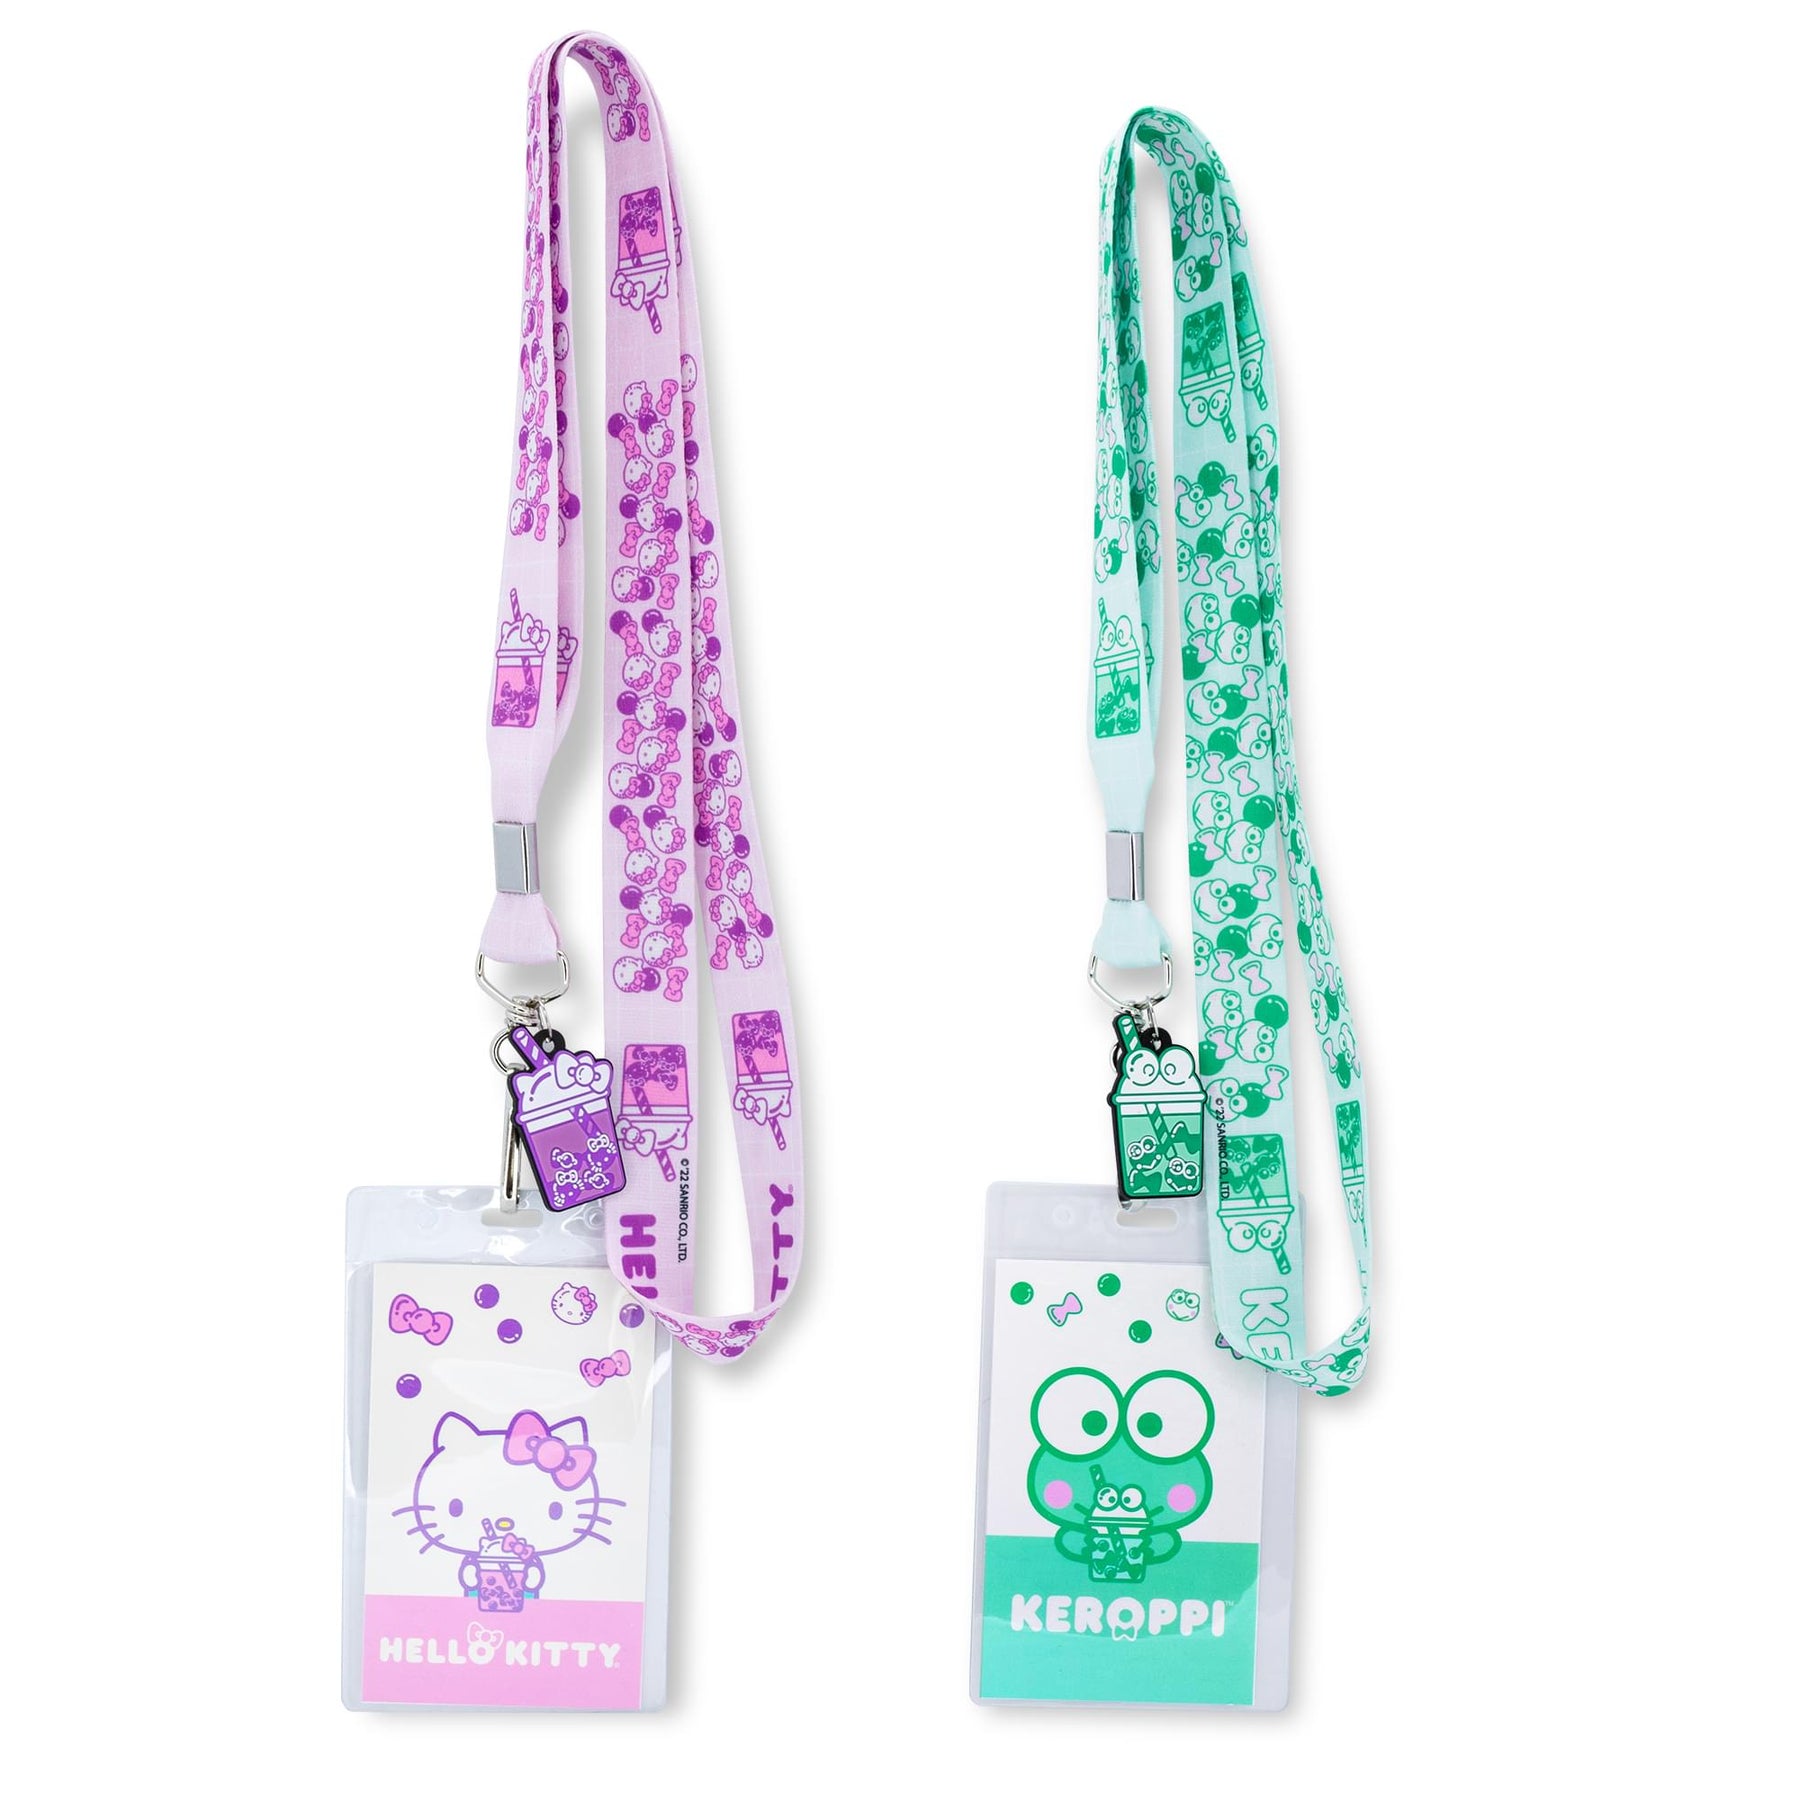 Sanrio Hello Kitty and Keroppi Boba Tea Lanyards with Badge Holders Set of 2